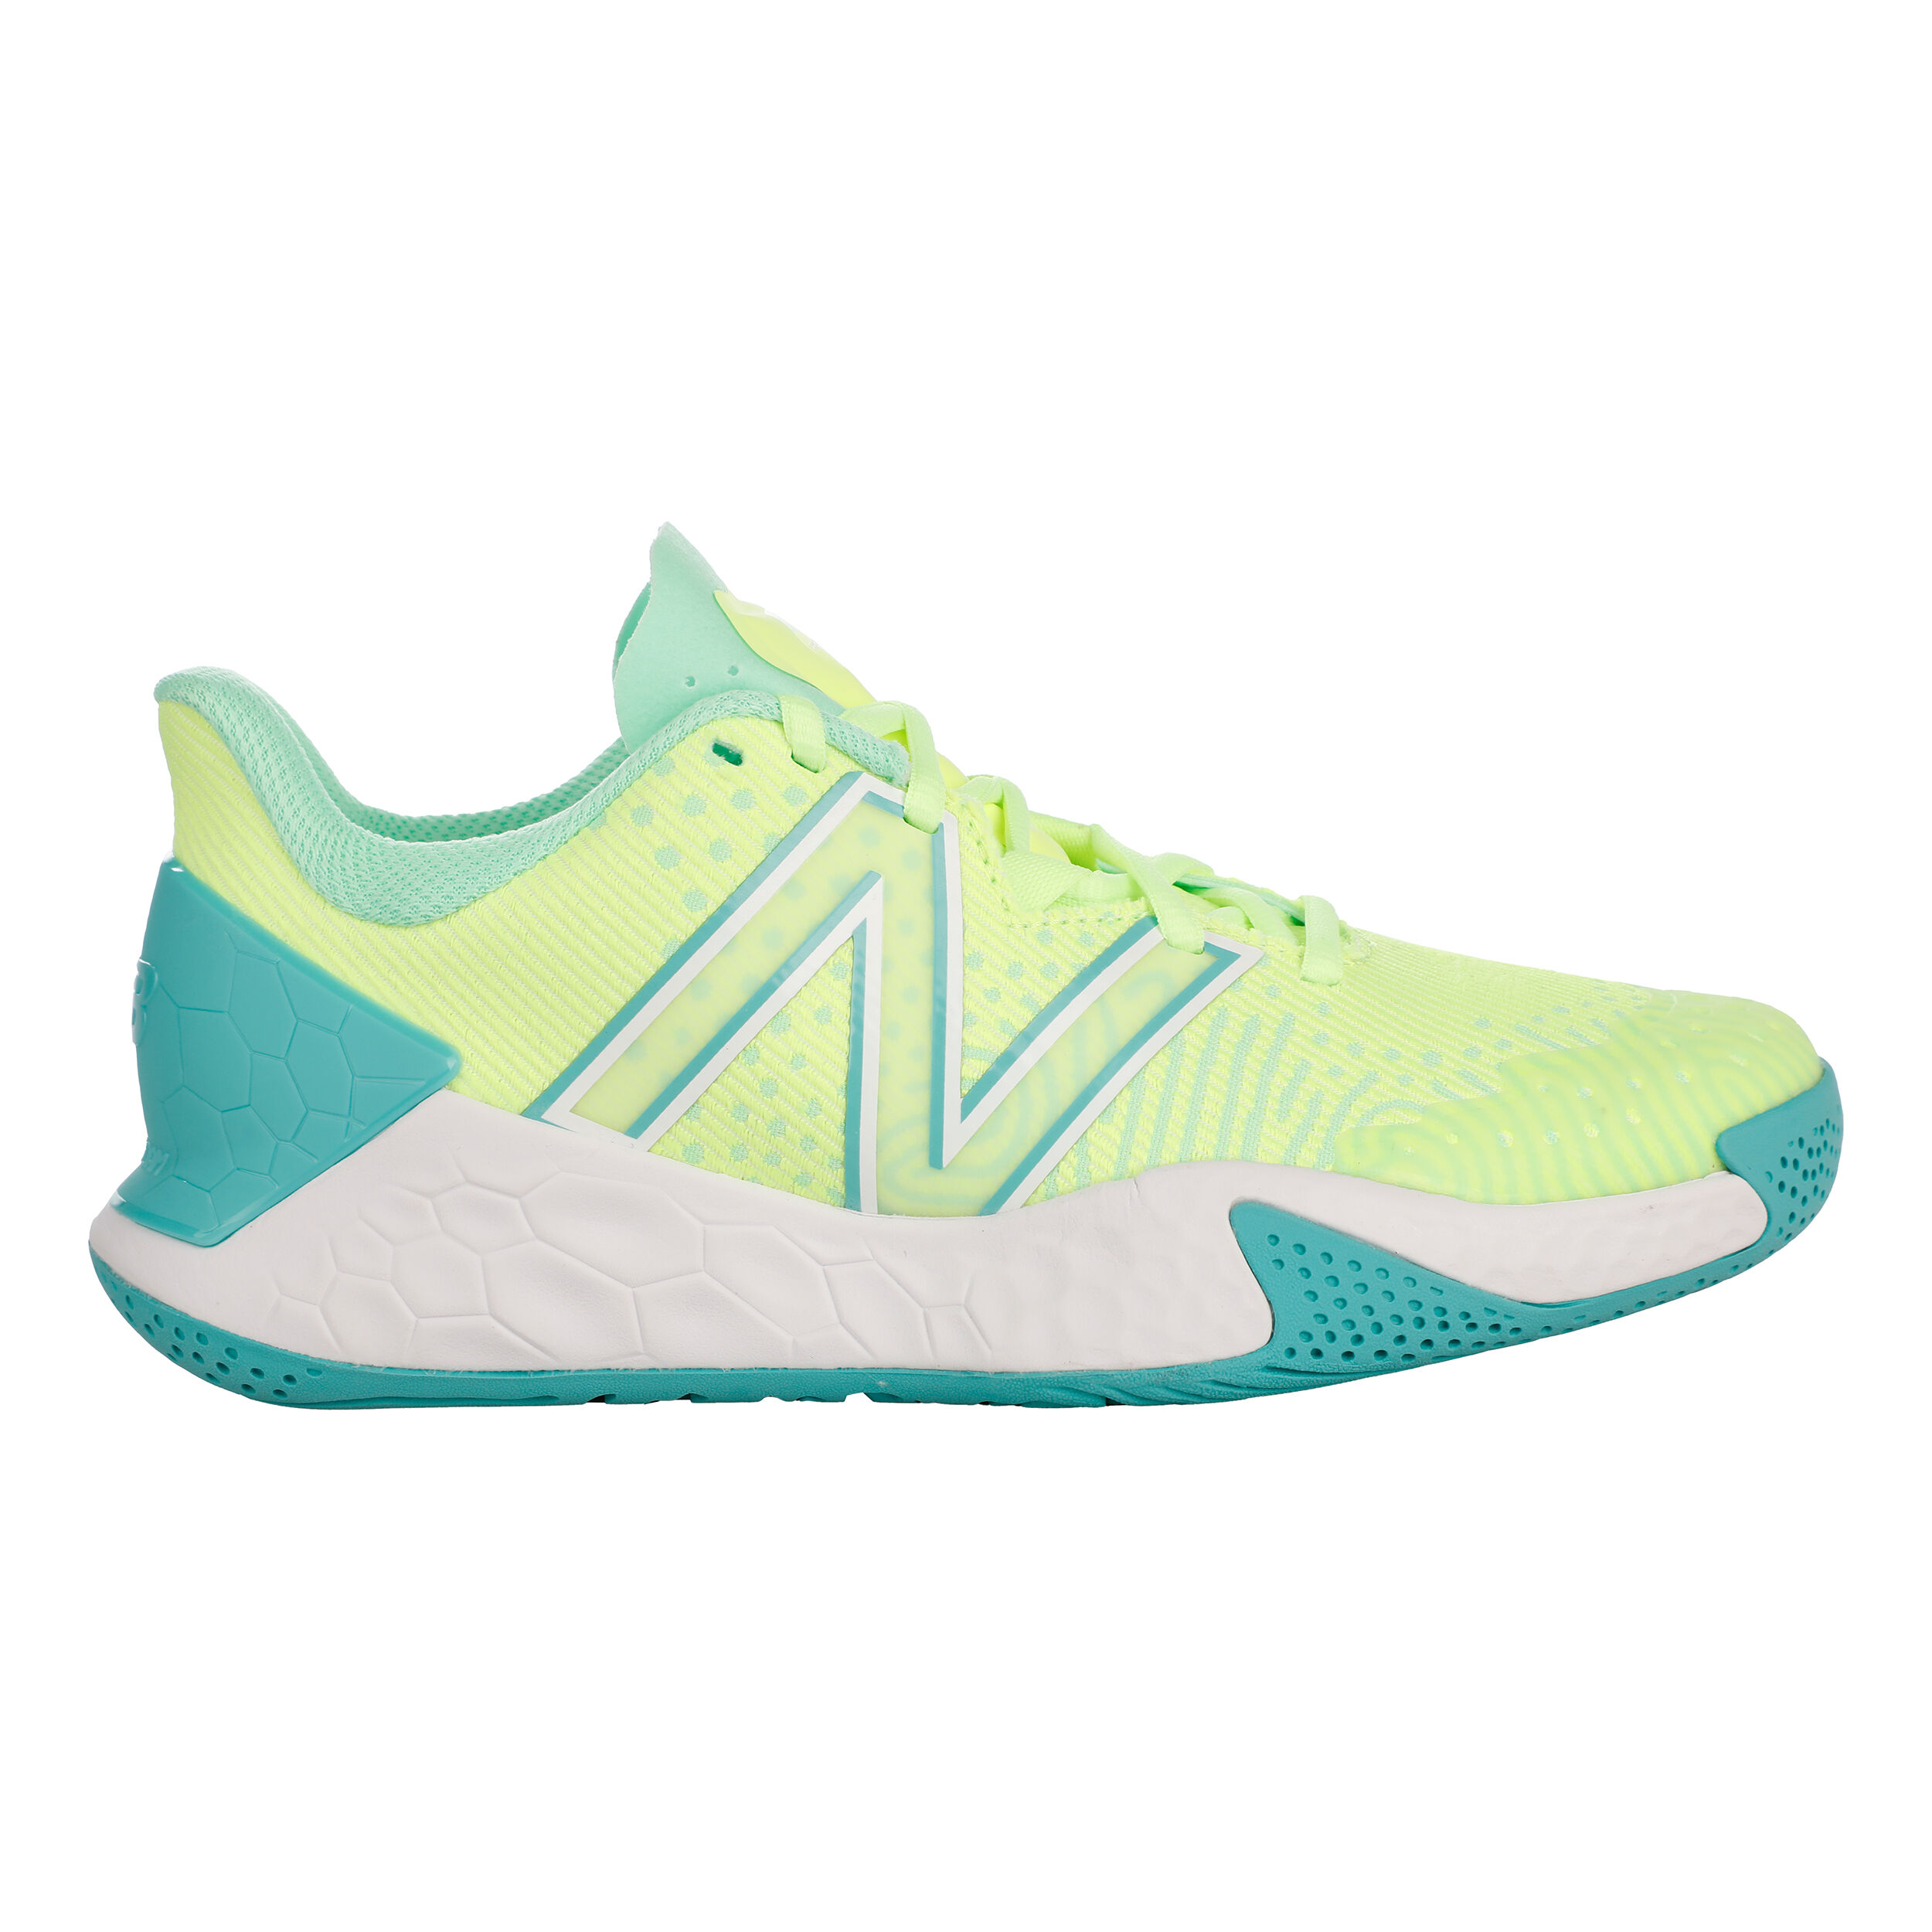 new balance tennis shoes online